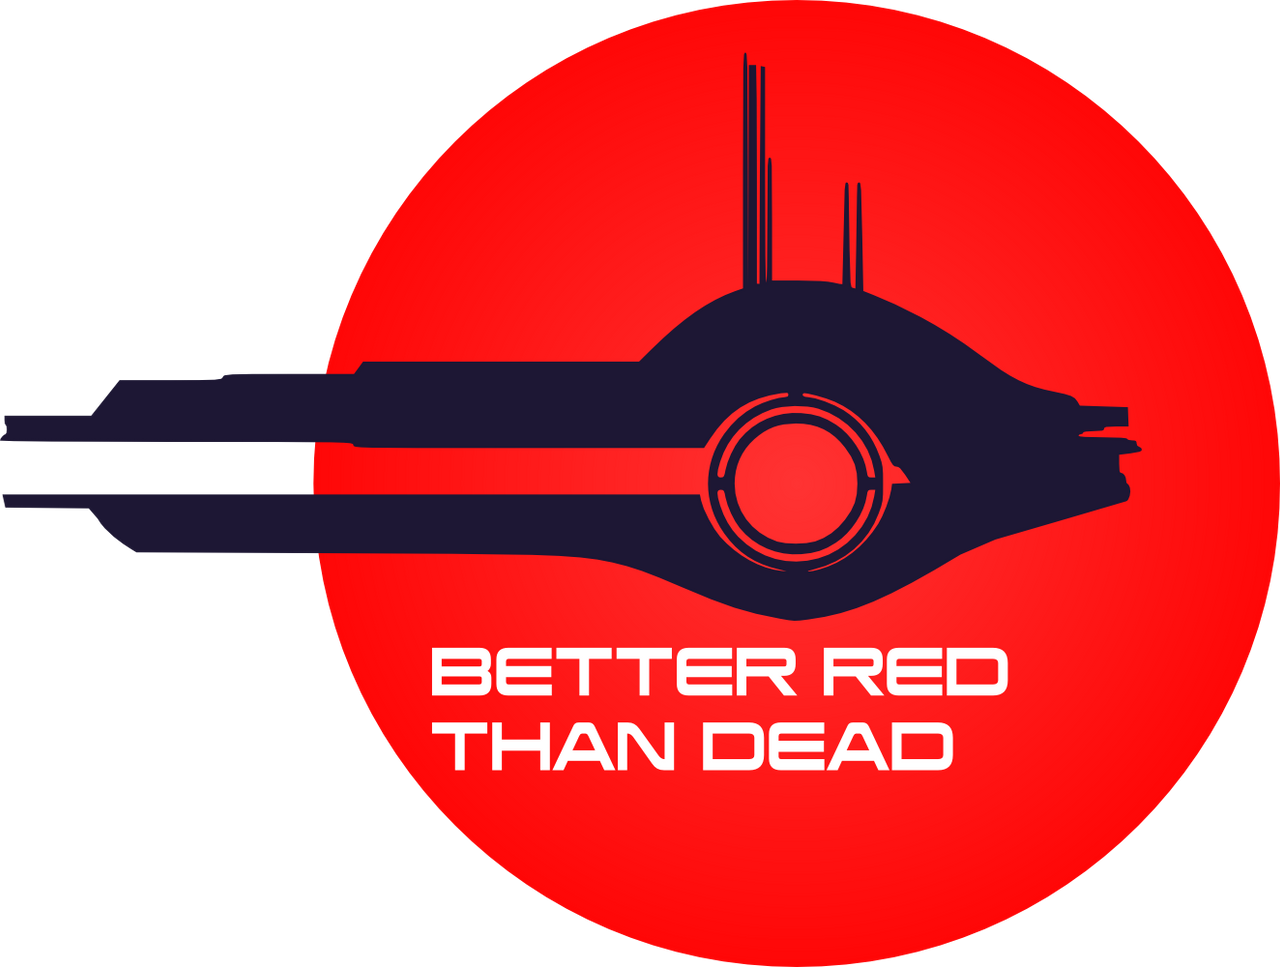 Than dead. Better Dead than Red. Better Dead than Red PNG. "Rather Dead than Red". Better Dead than Red футболка.